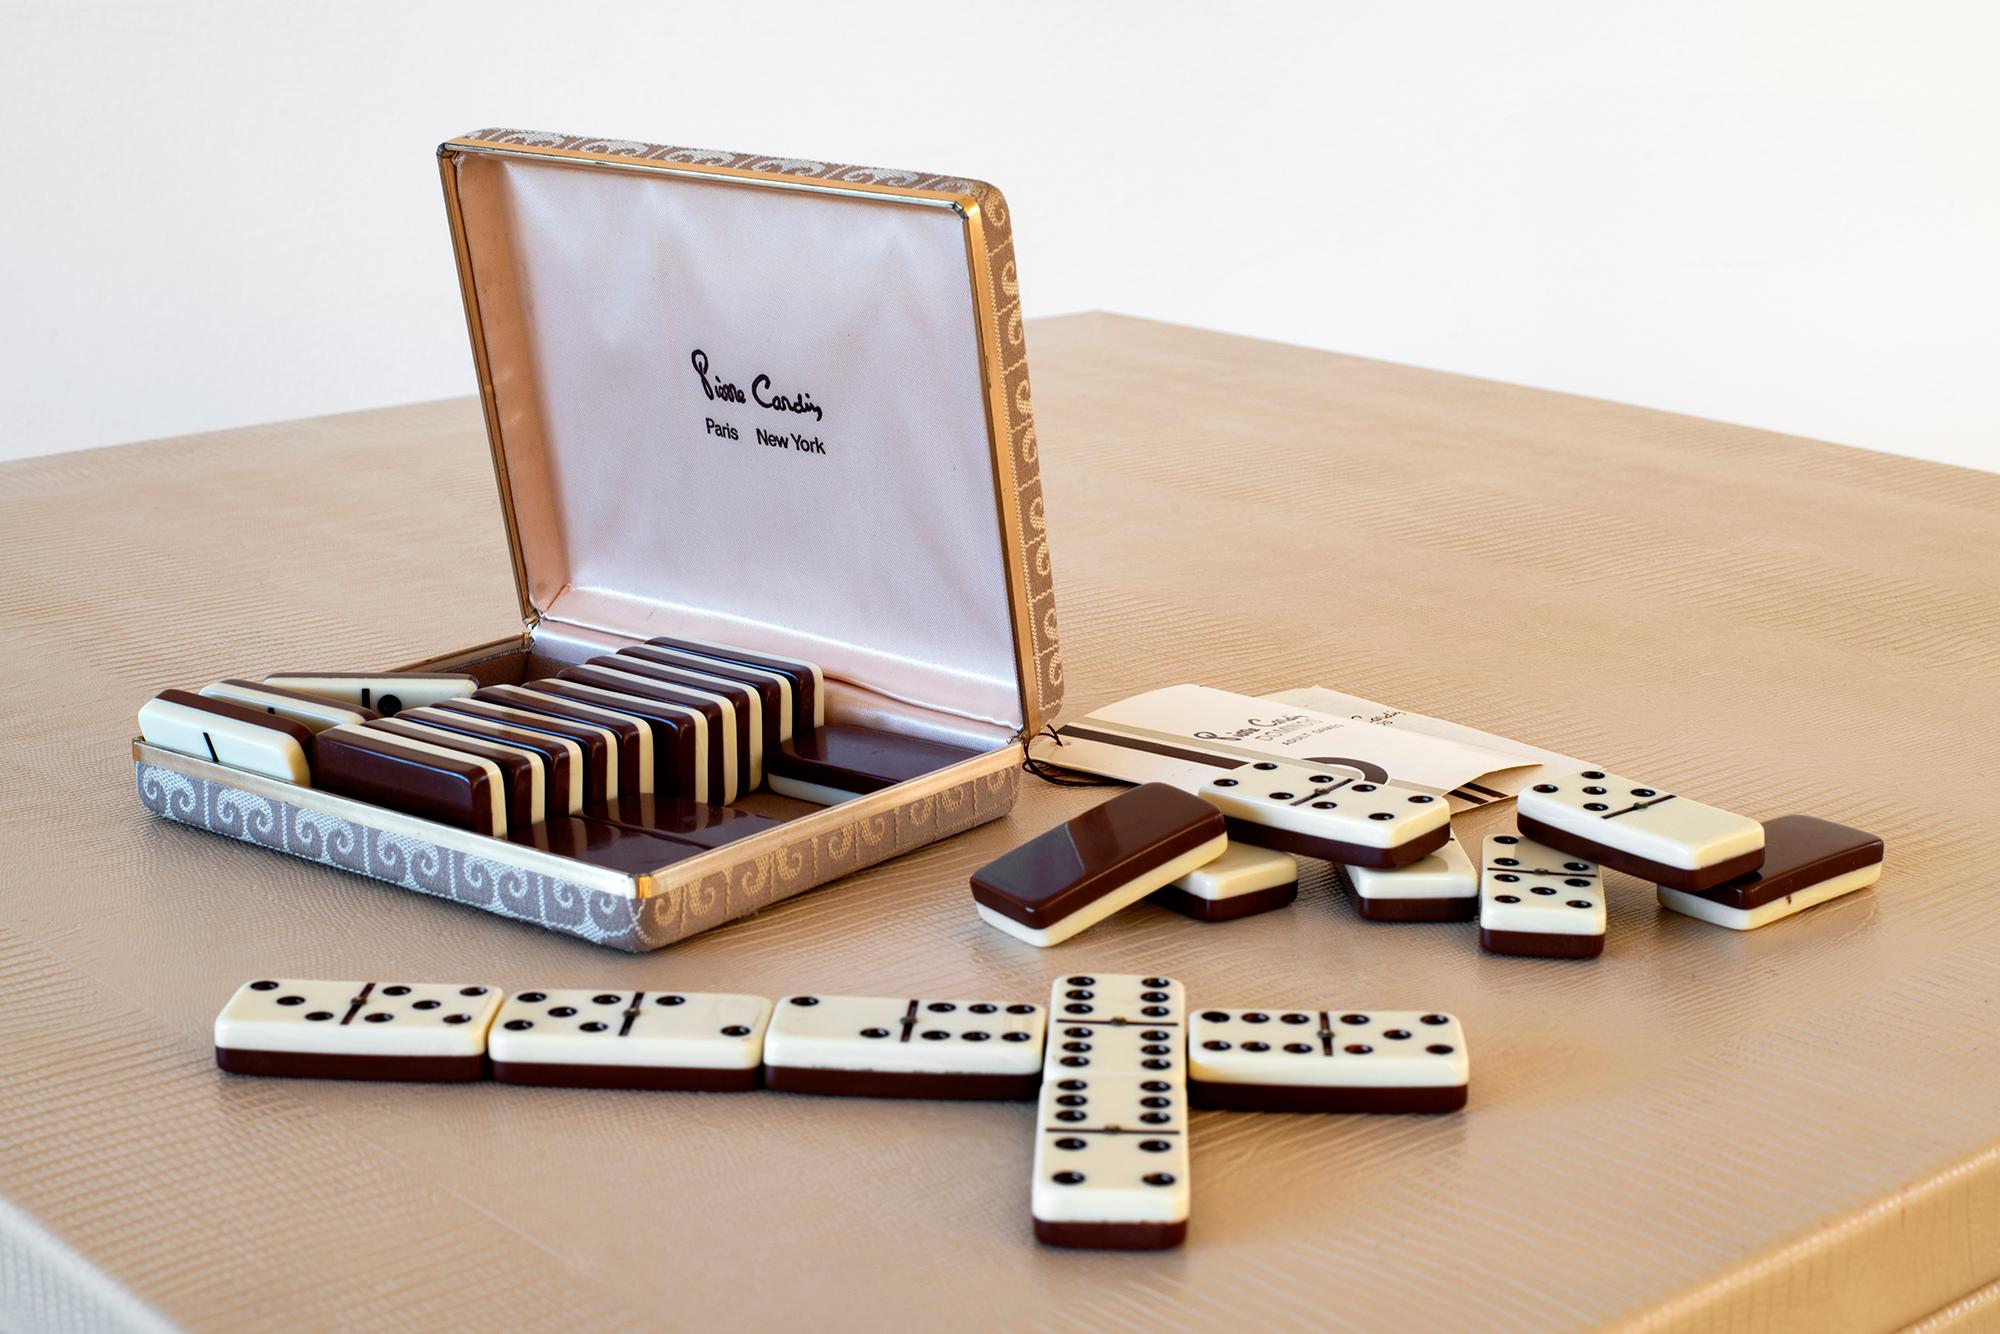 Pierre Cardin domino set with original brocade fabric case.

Pristin original condition with 30 original pieces.